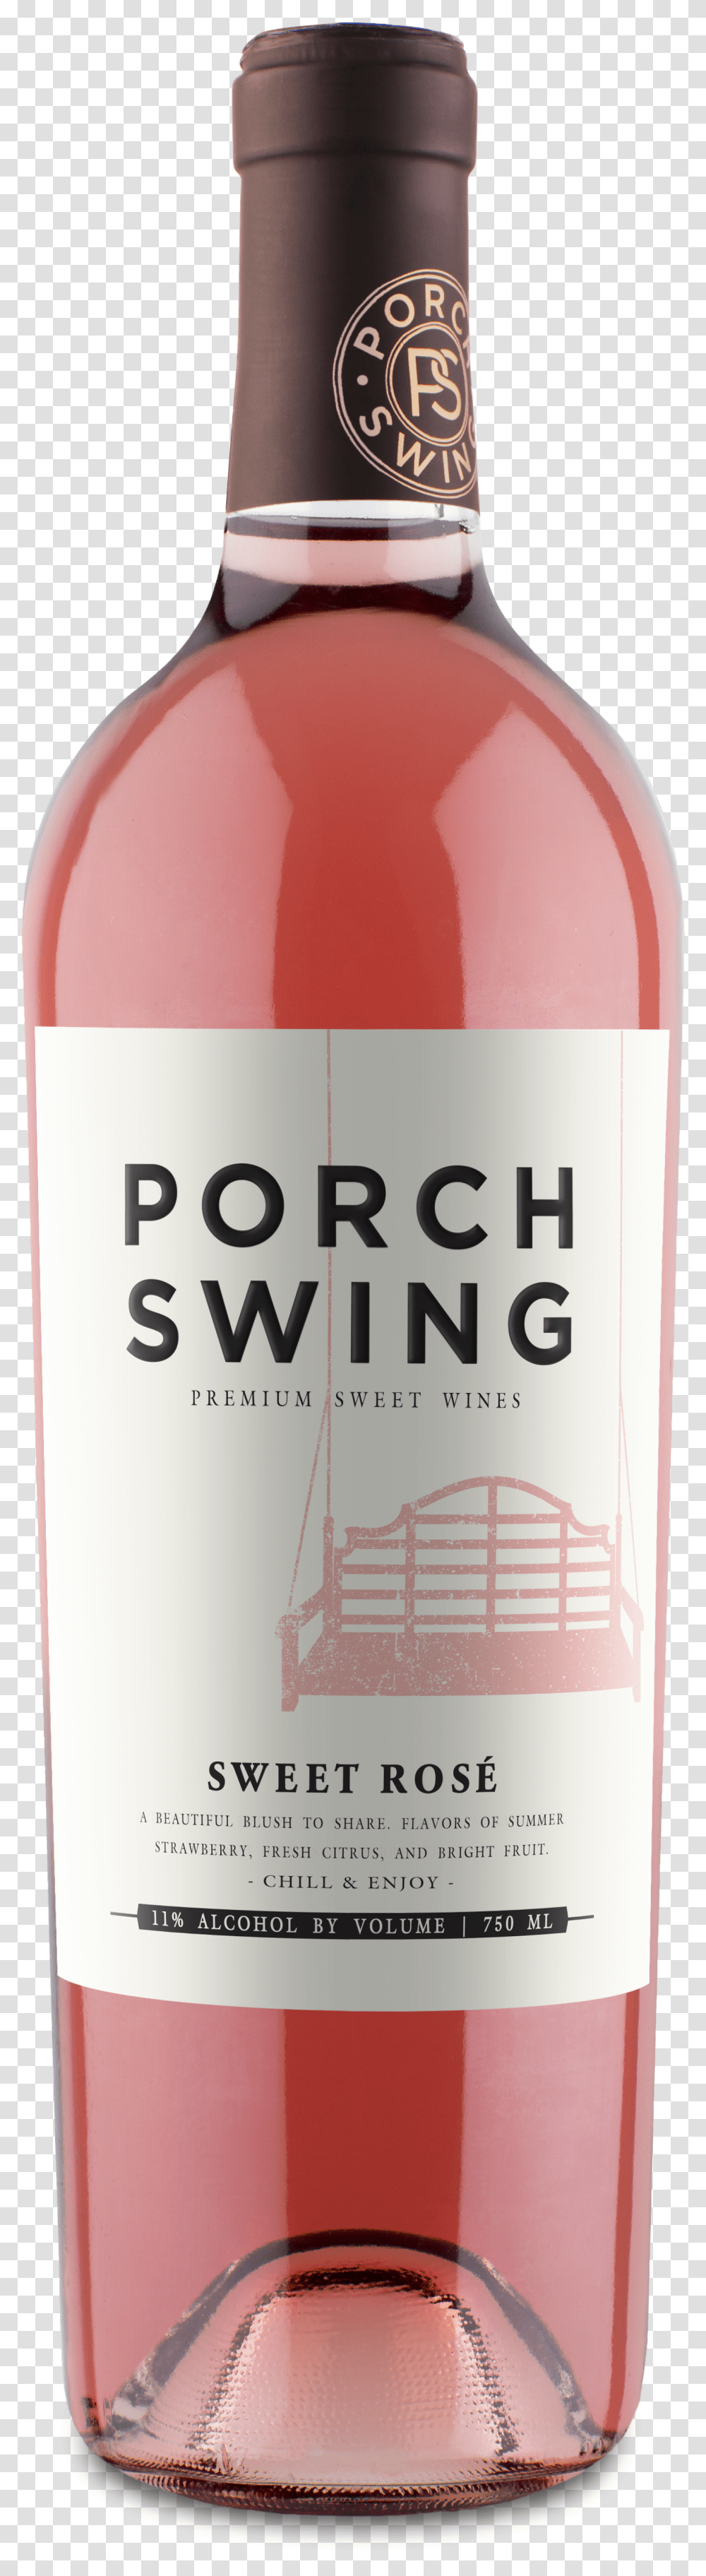 Porch Swing Sweet Rose Transparent Png